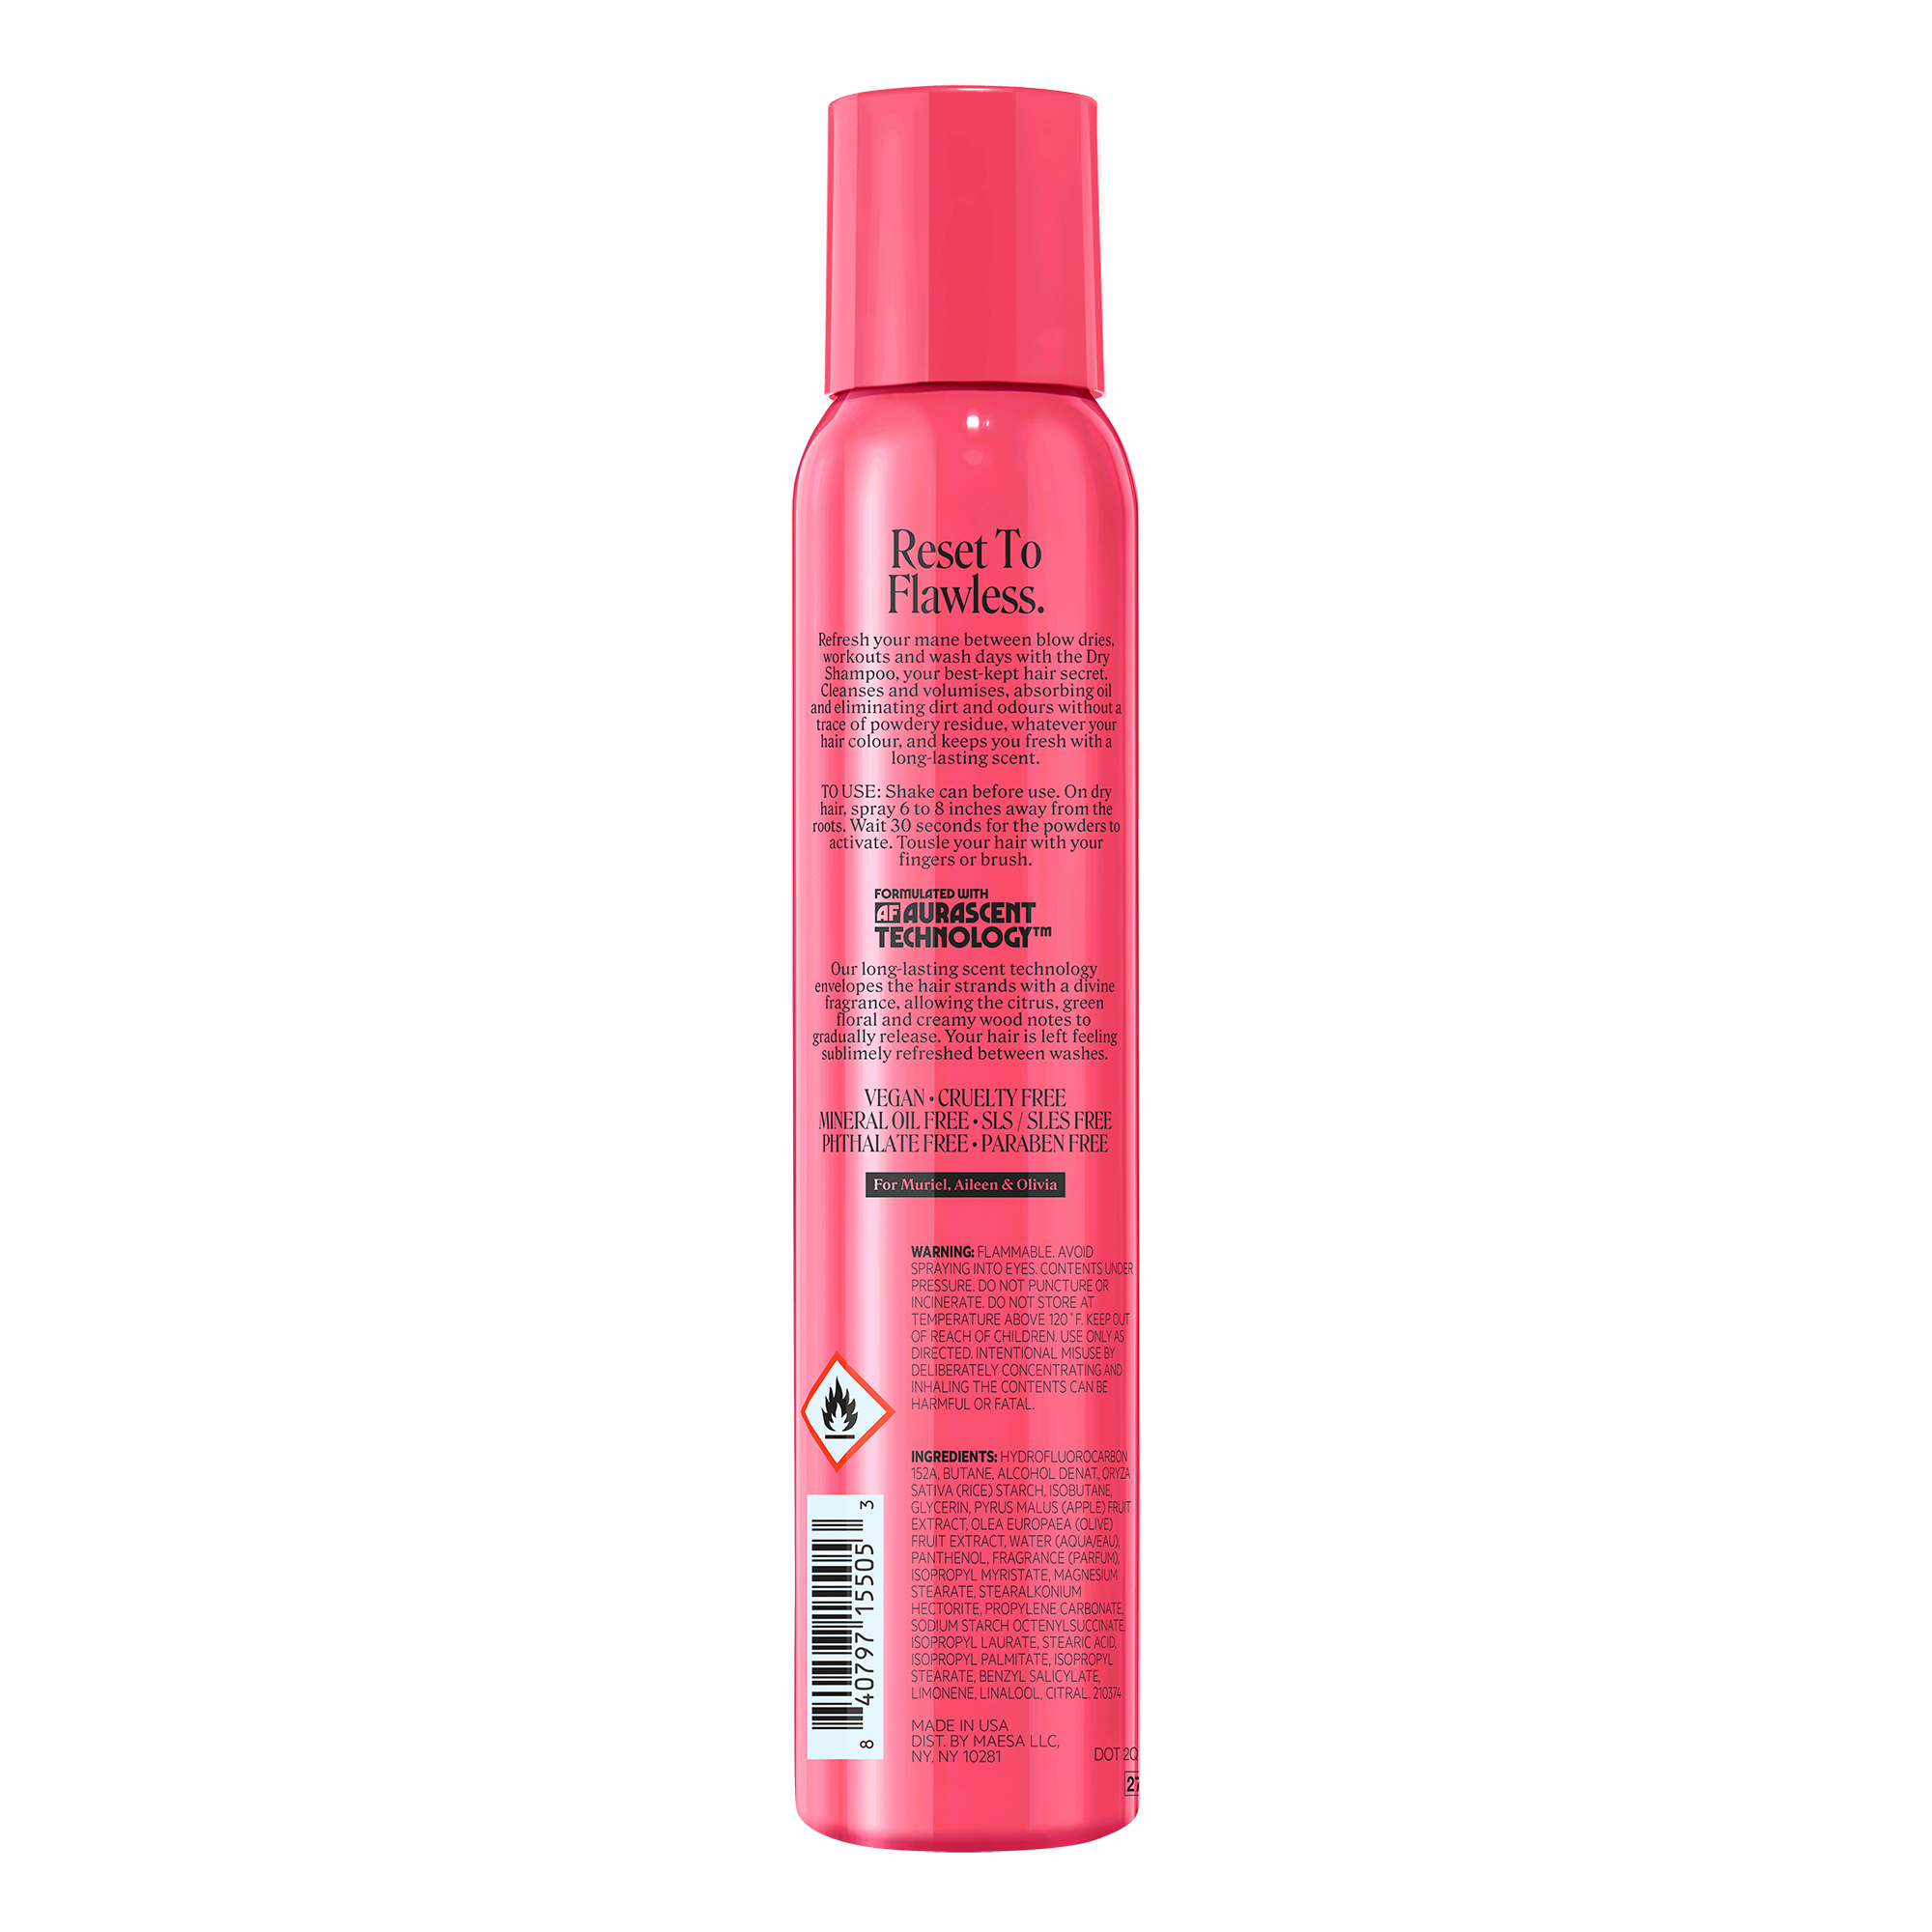 DISCREET AF Dry Shampoo Spray for All Hair Types